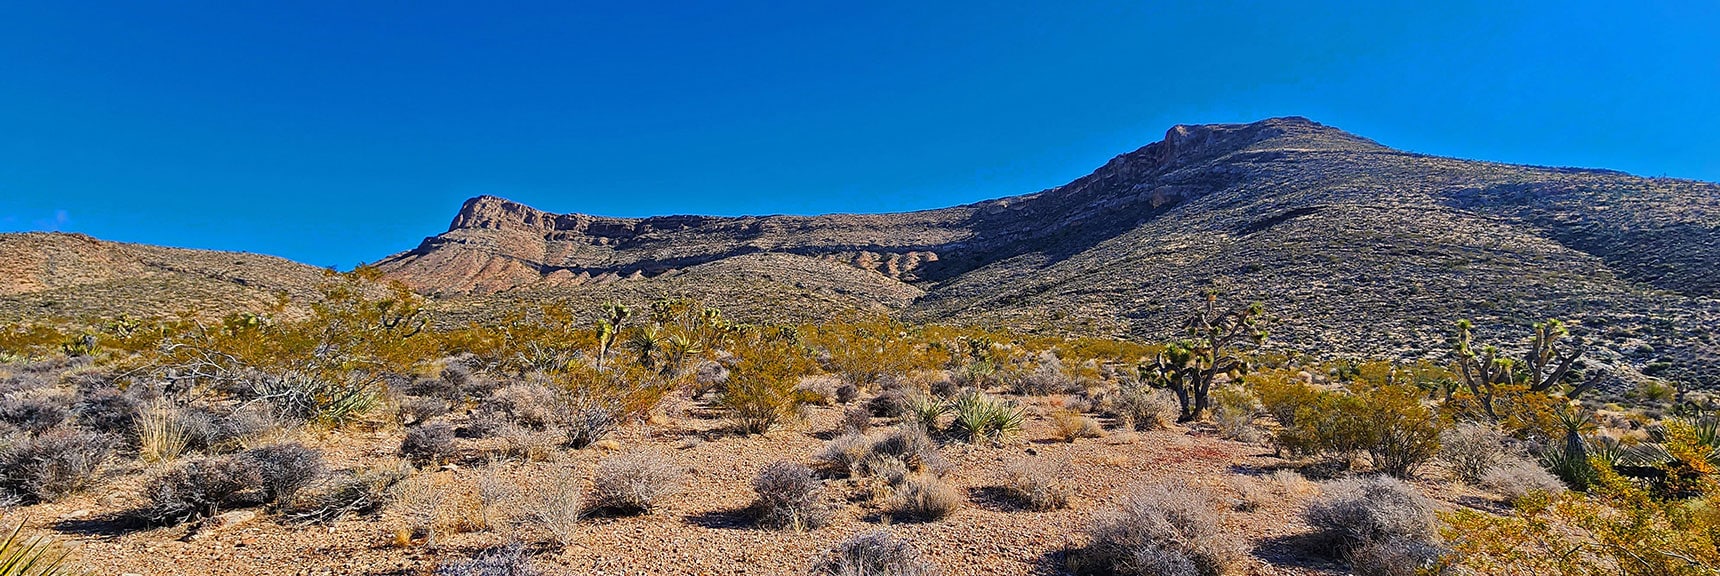 Long Ridge Canyon Has a Vertical Cliff Band Half Way Up Slope. | Landmark Bluff Summit | Lovell Canyon, Nevada